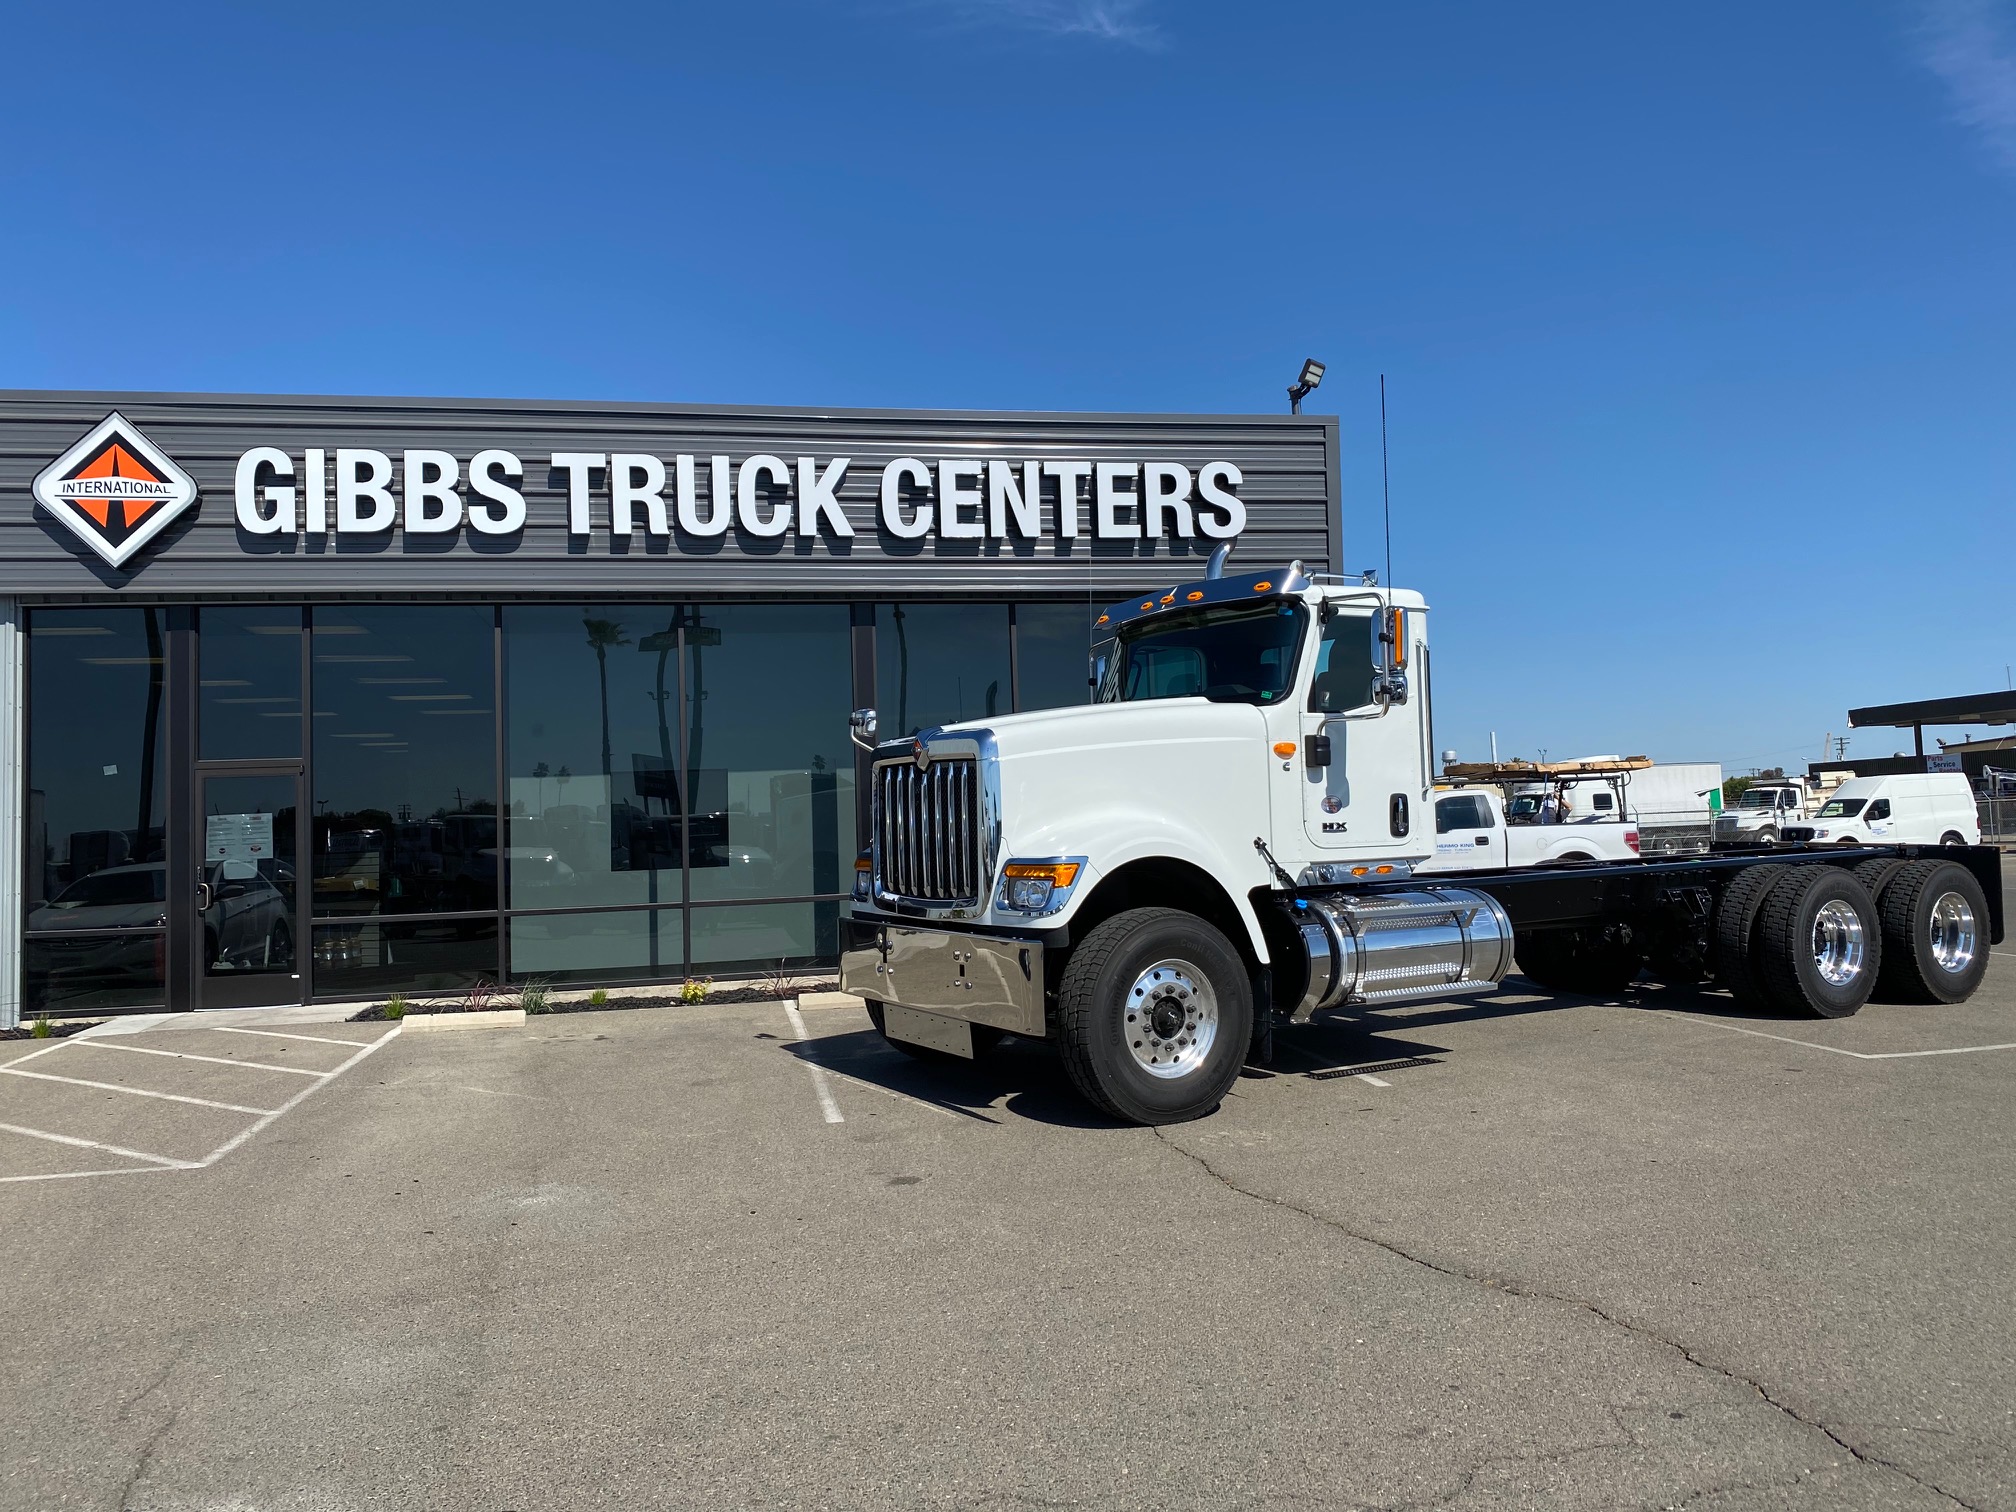 Gibbs Truck Centers - Fresno, CA